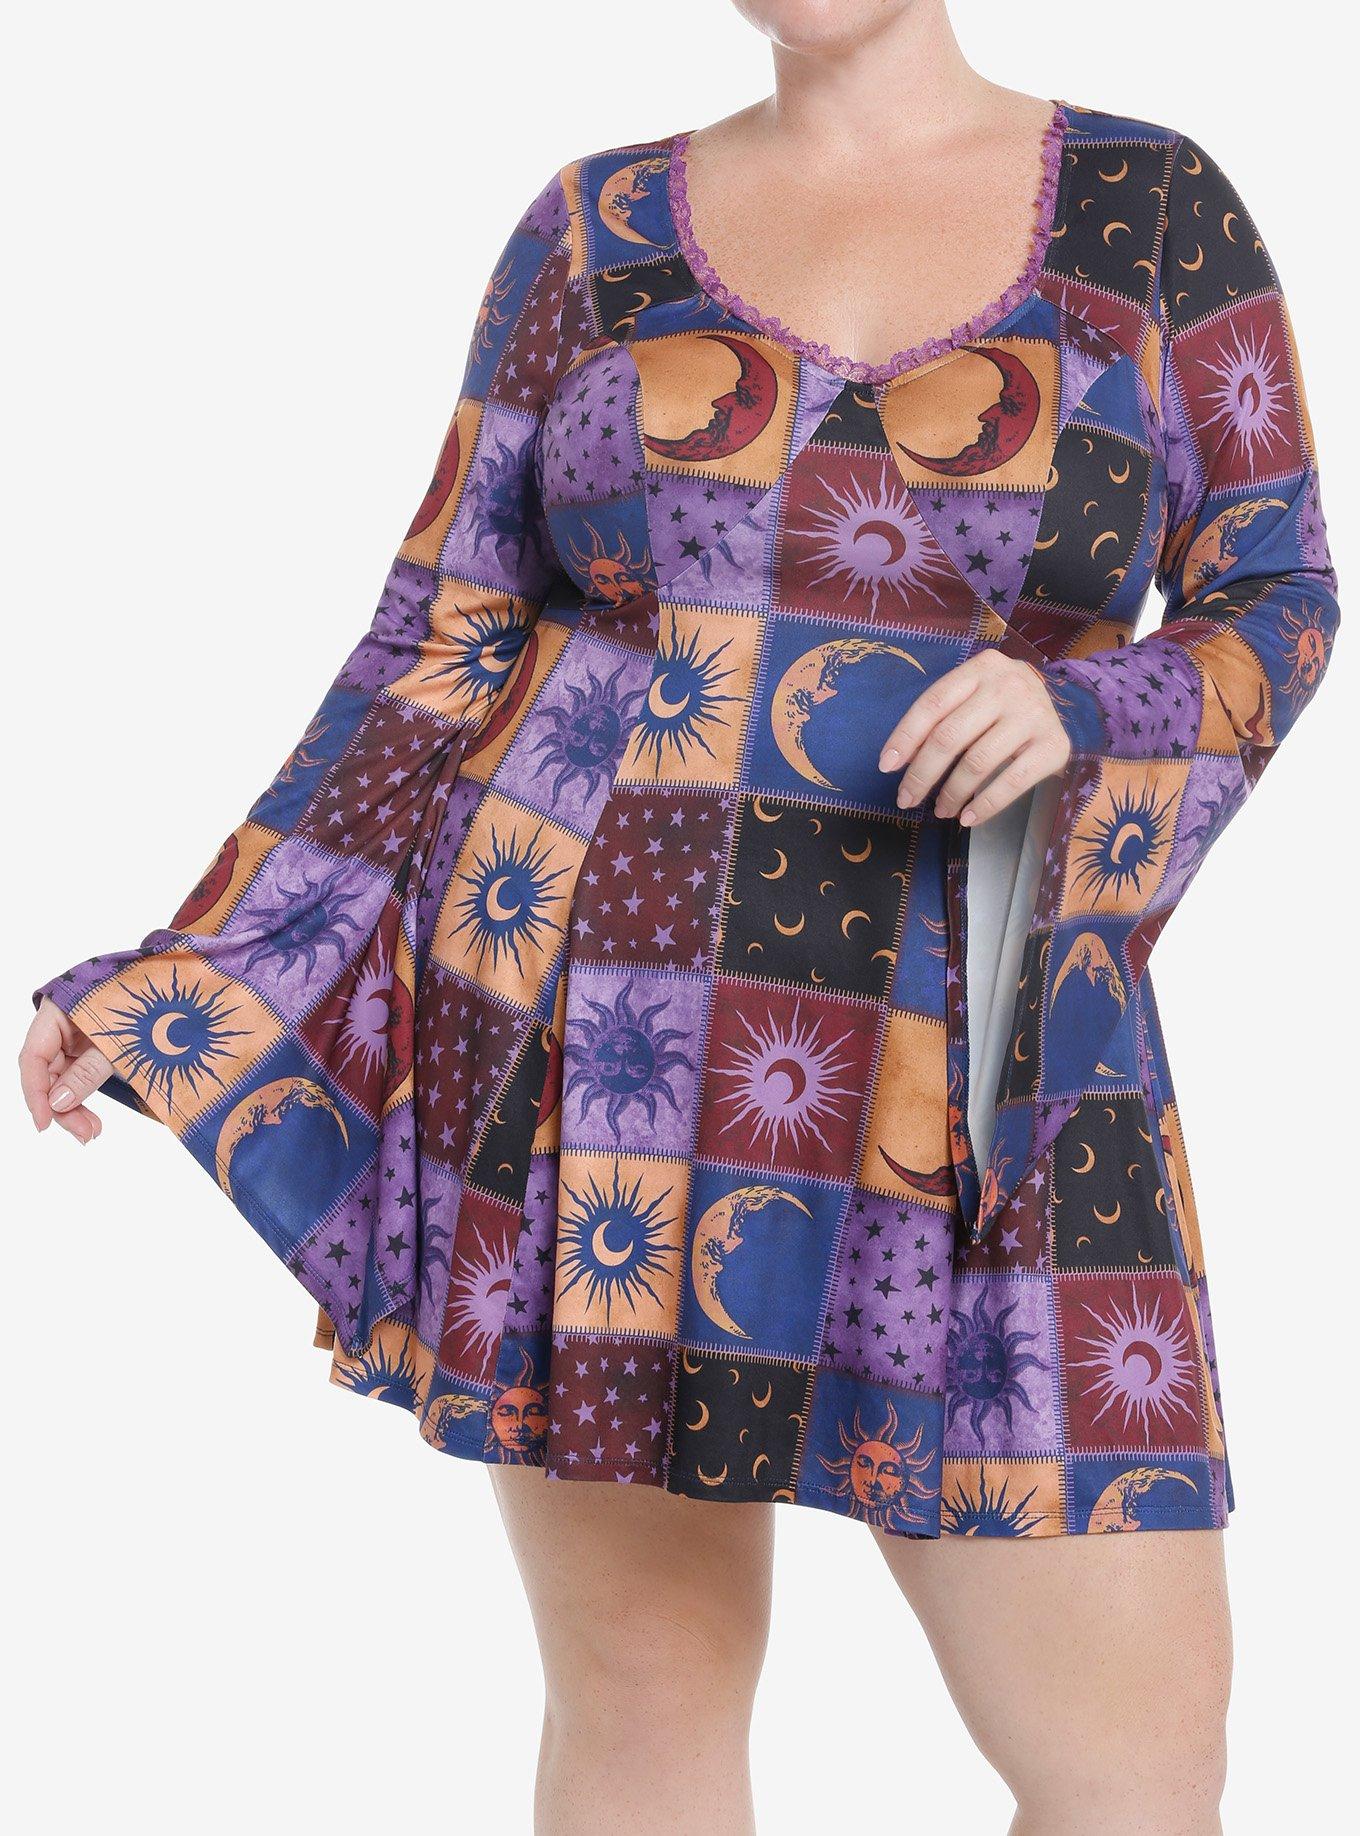 Wicked Dragon Clothing - Flower print shoulder hippie bag